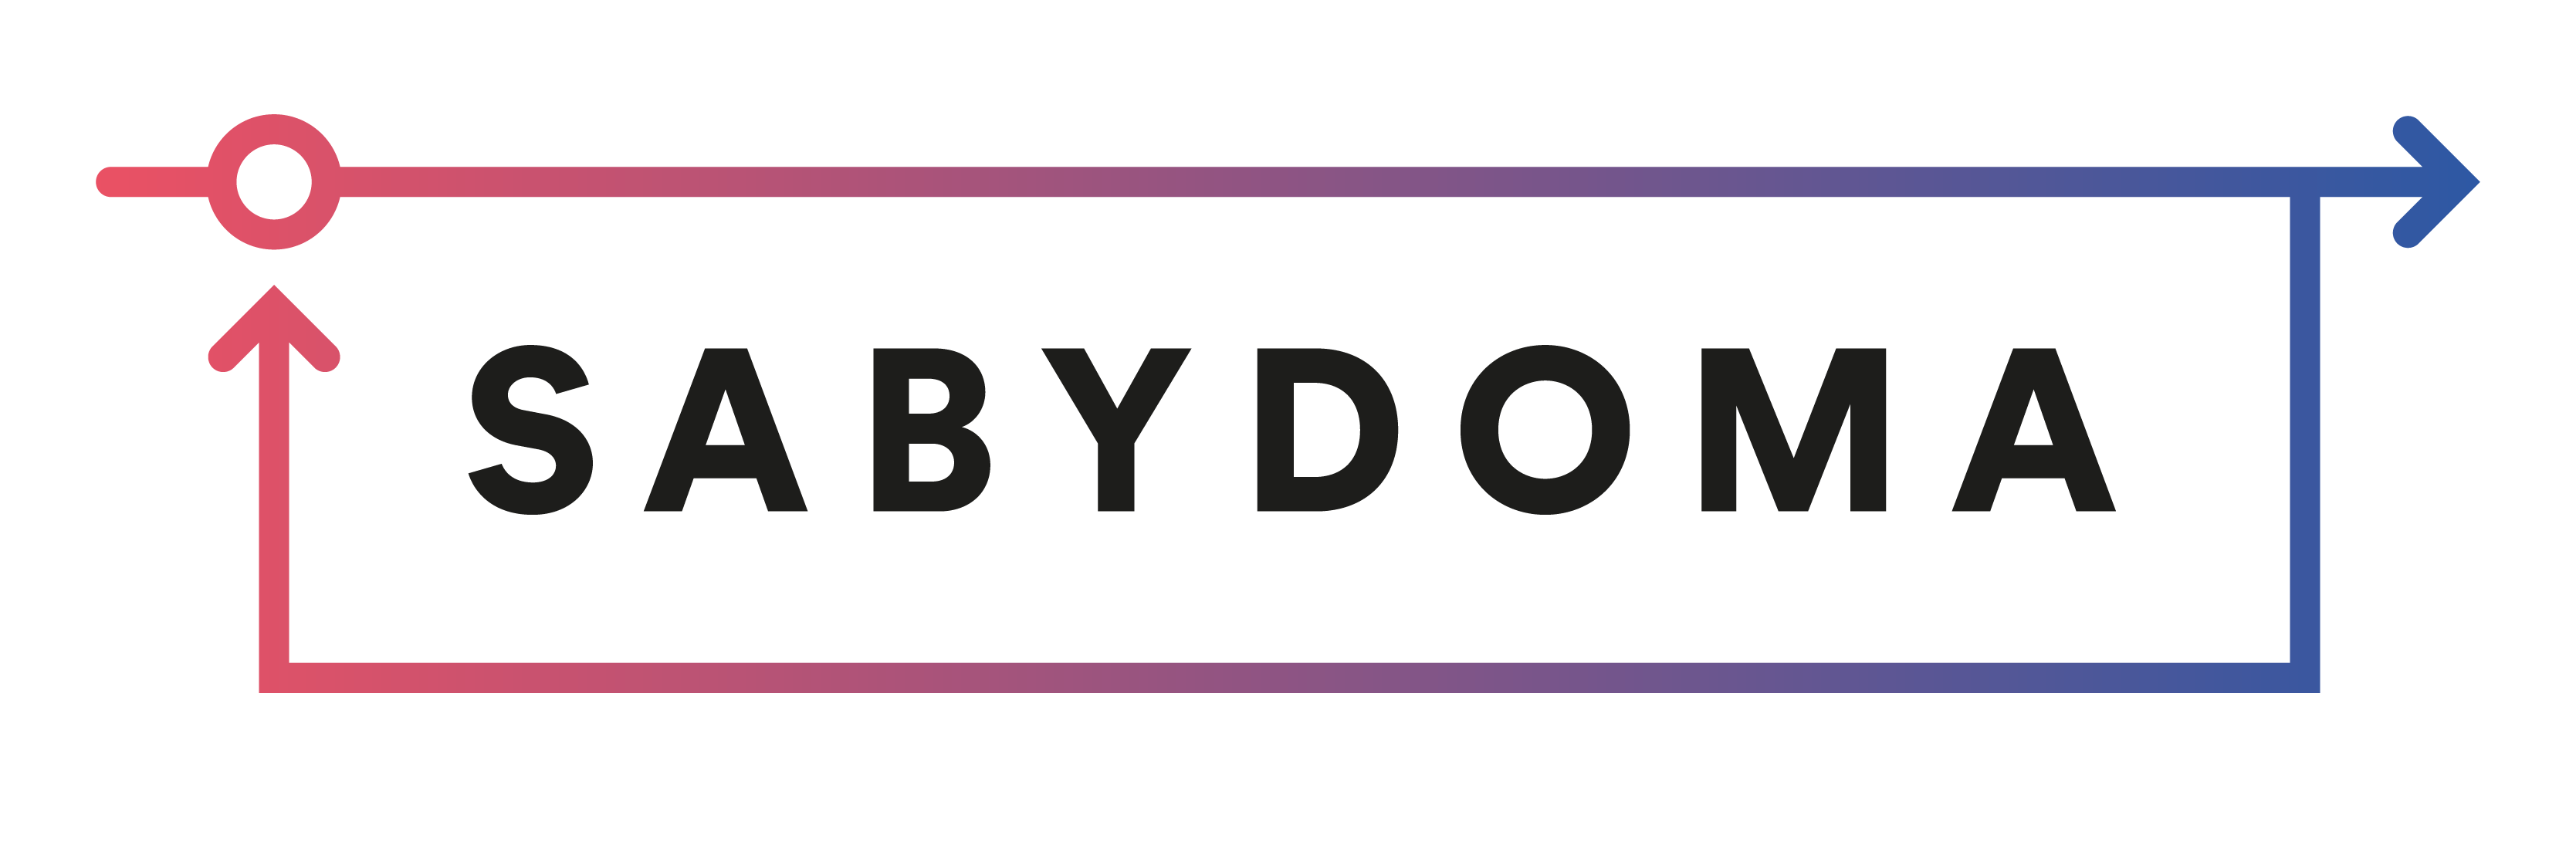 Sabydoma Logo